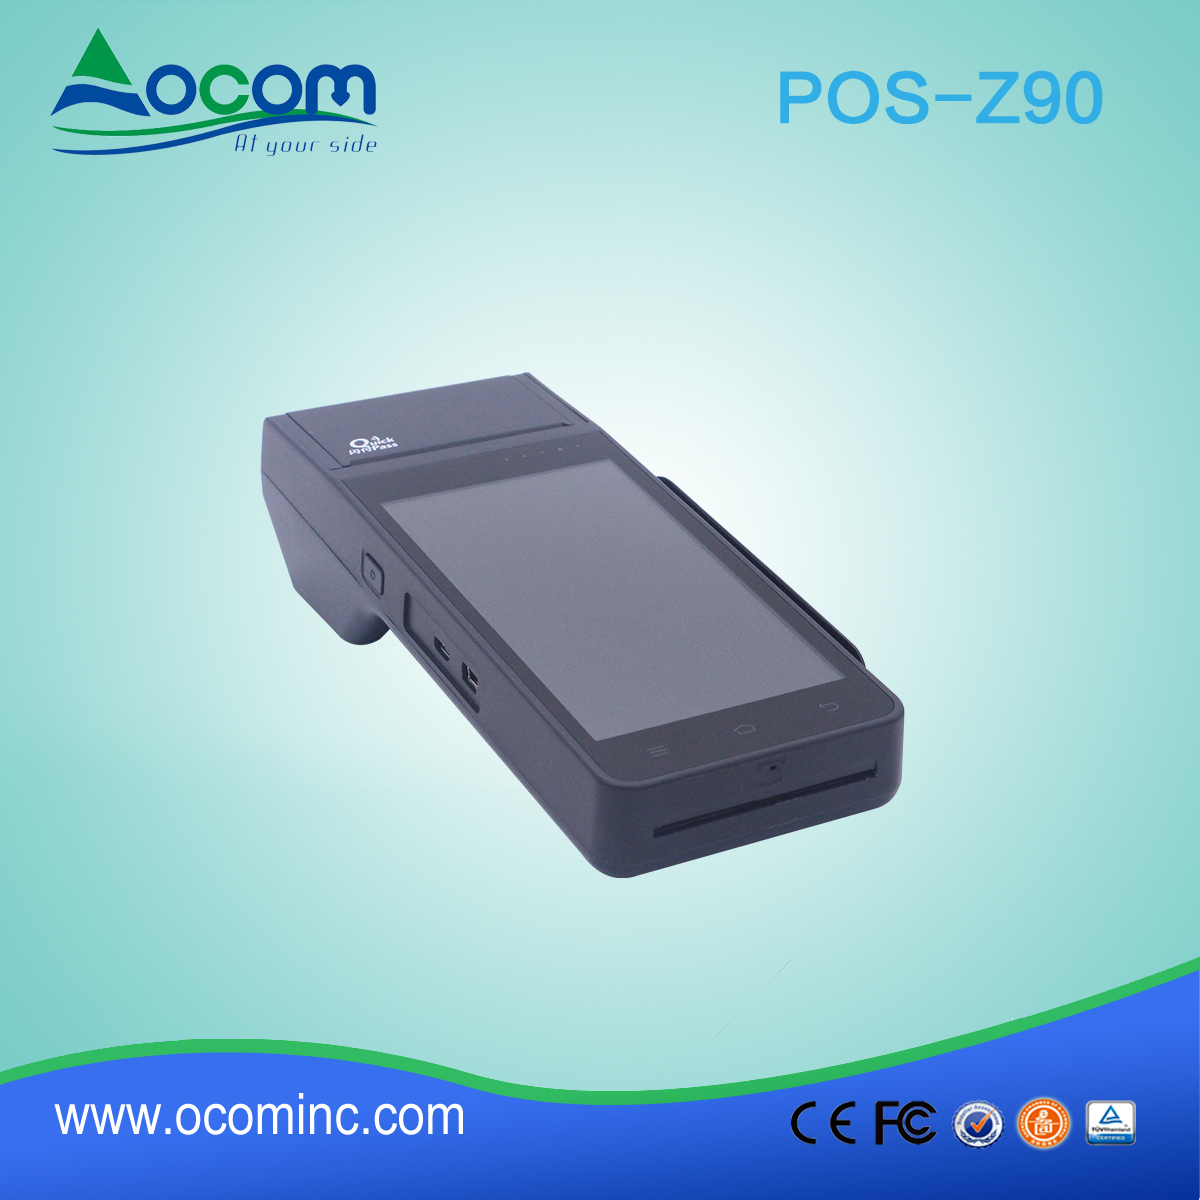 (POS-Z90) Low Cost Android Handheld POS Terminal mit Thermal Printer